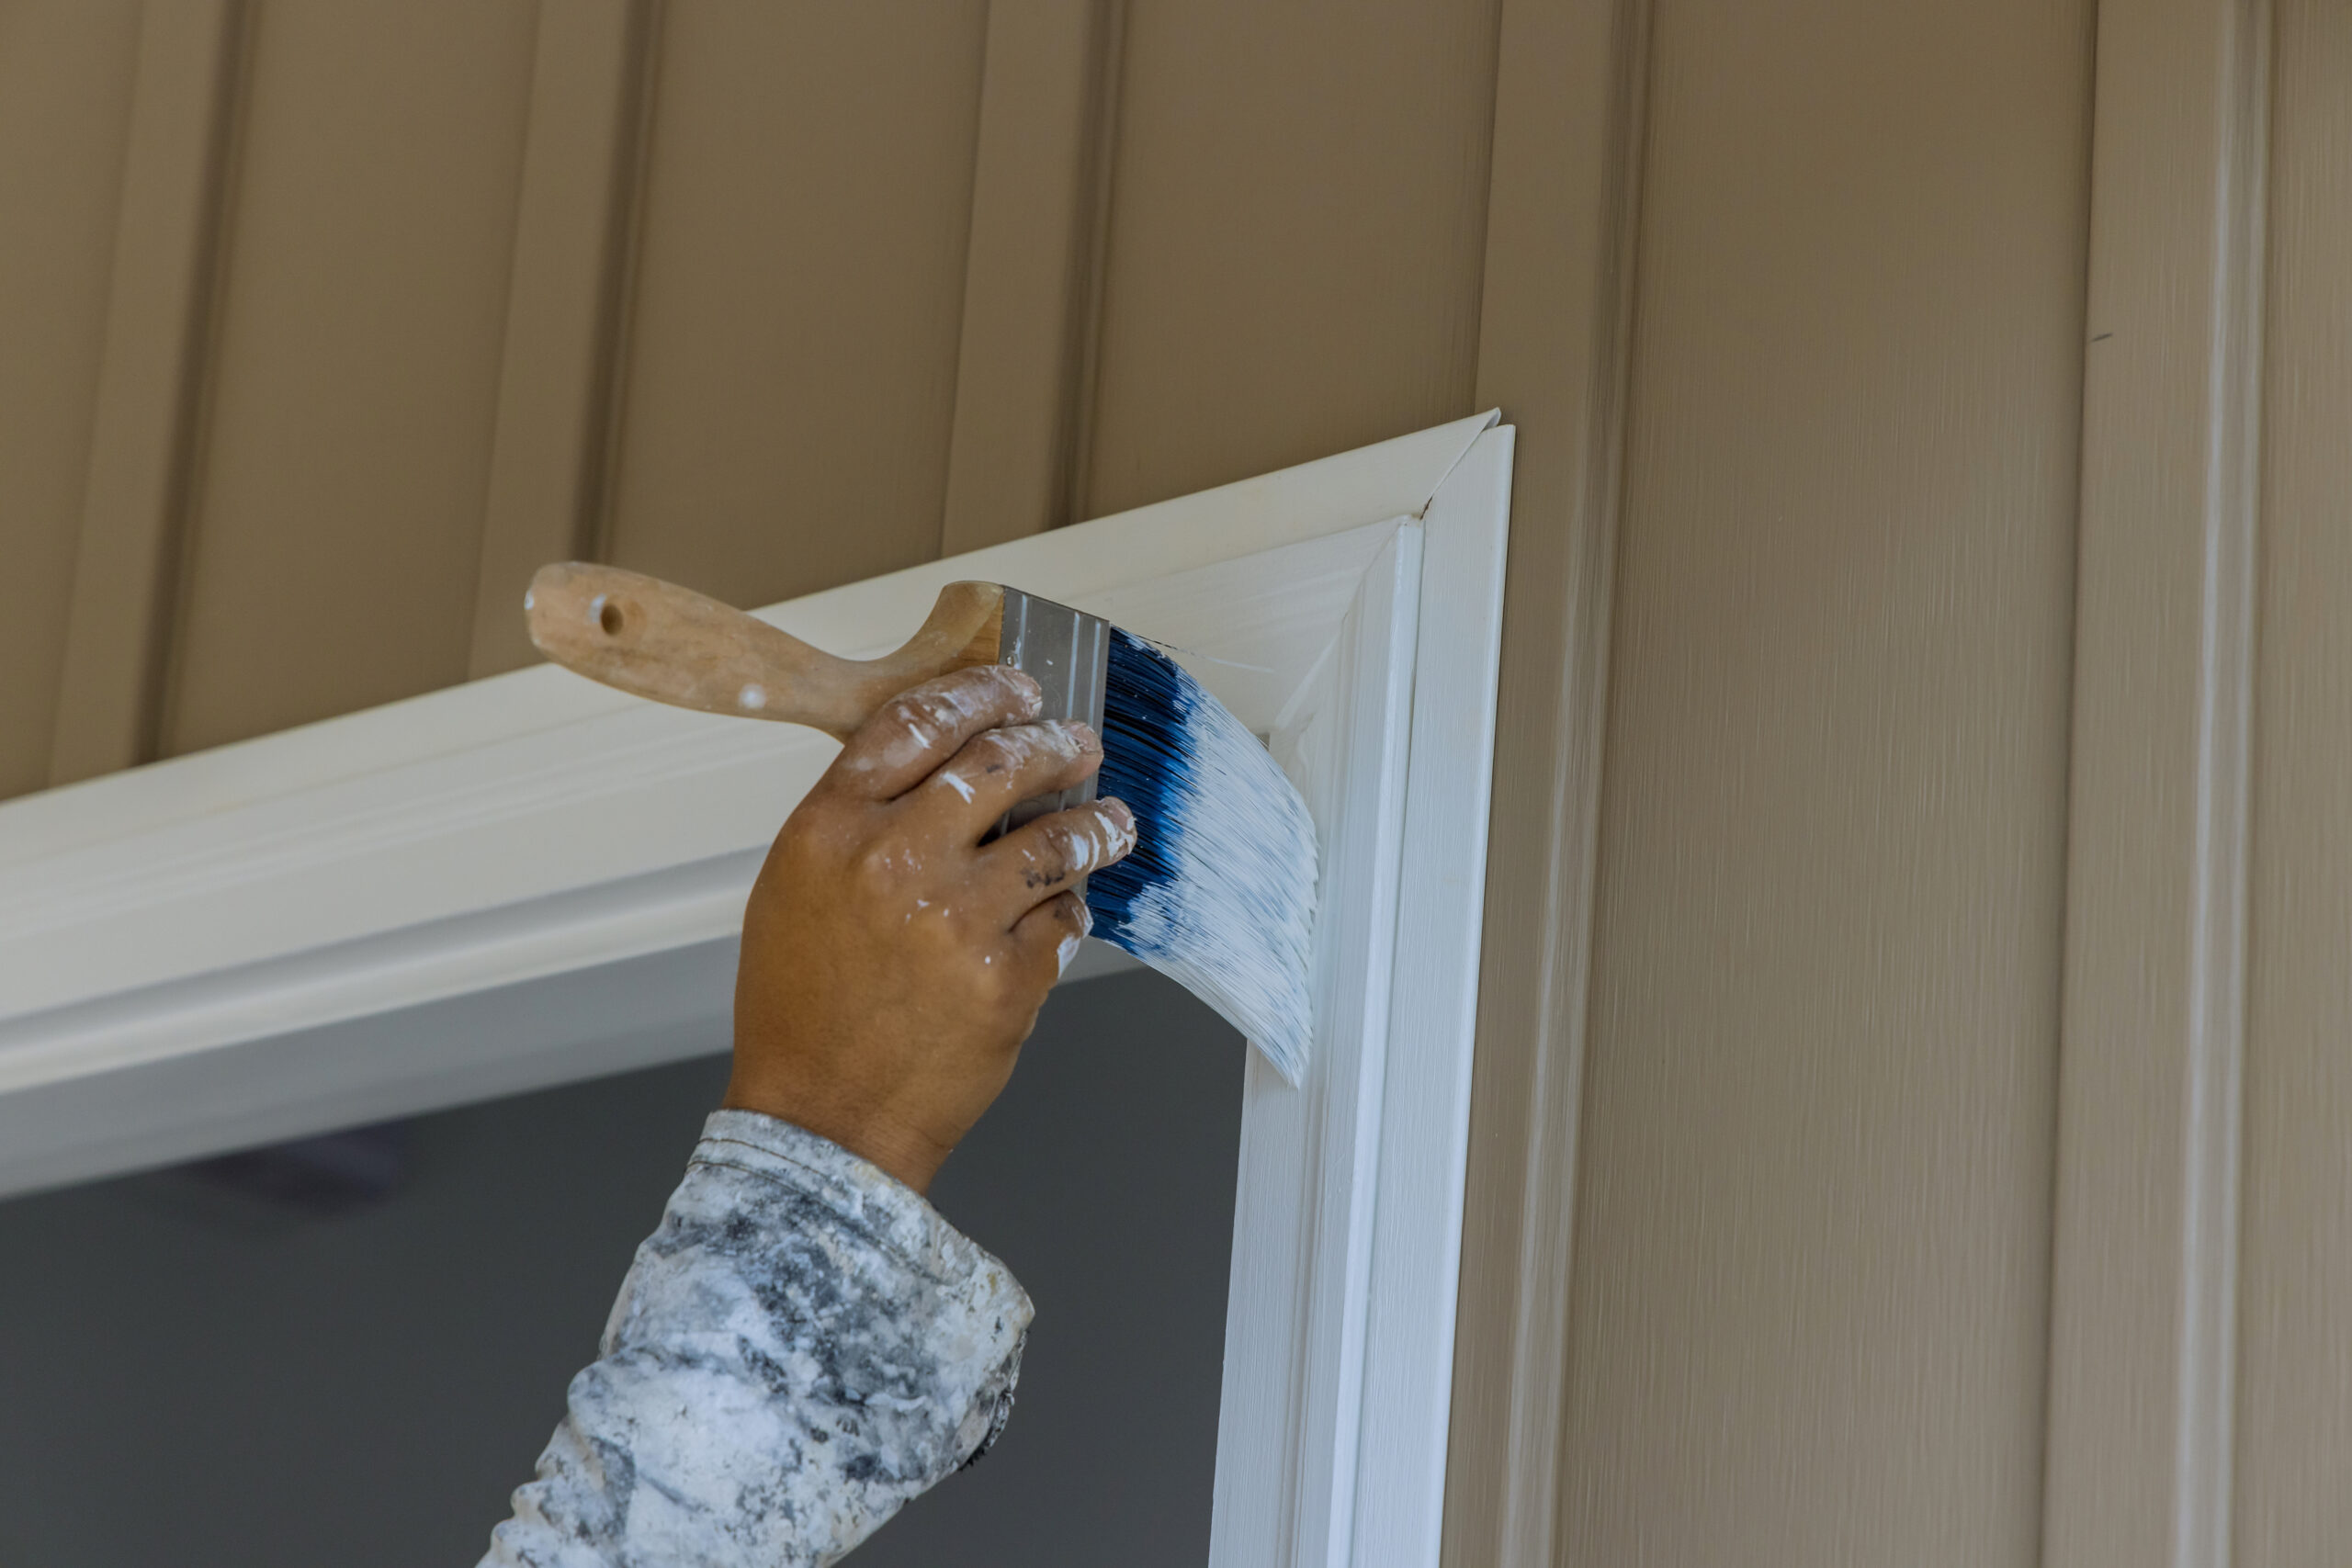 Painting wooden door trim - trim carpentry services